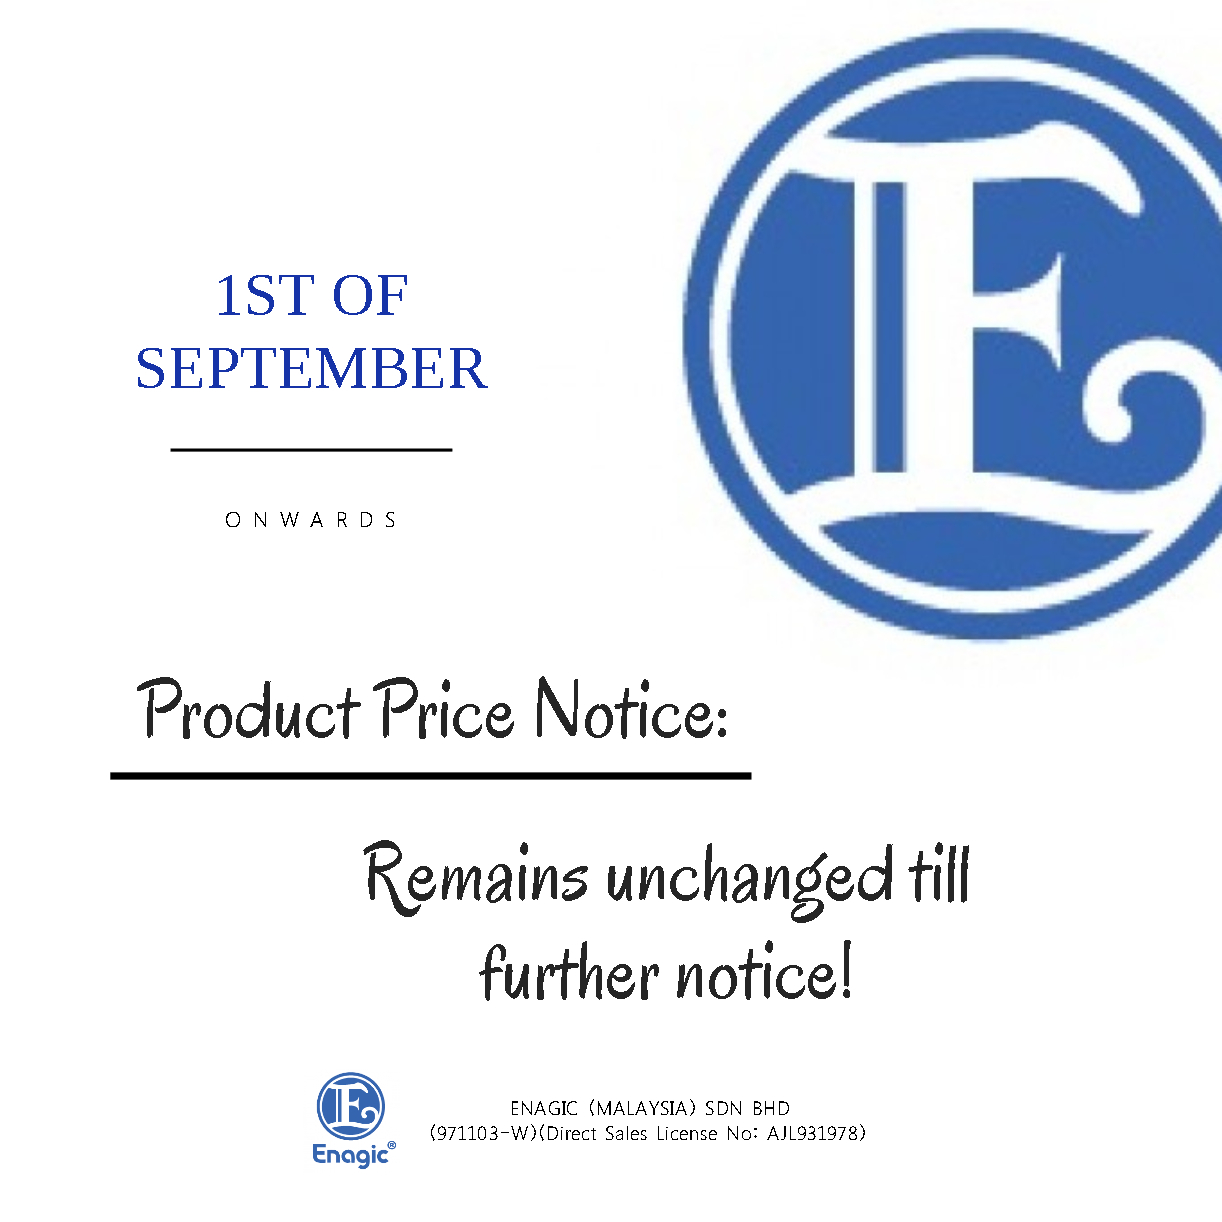 NOTICE: Product Price